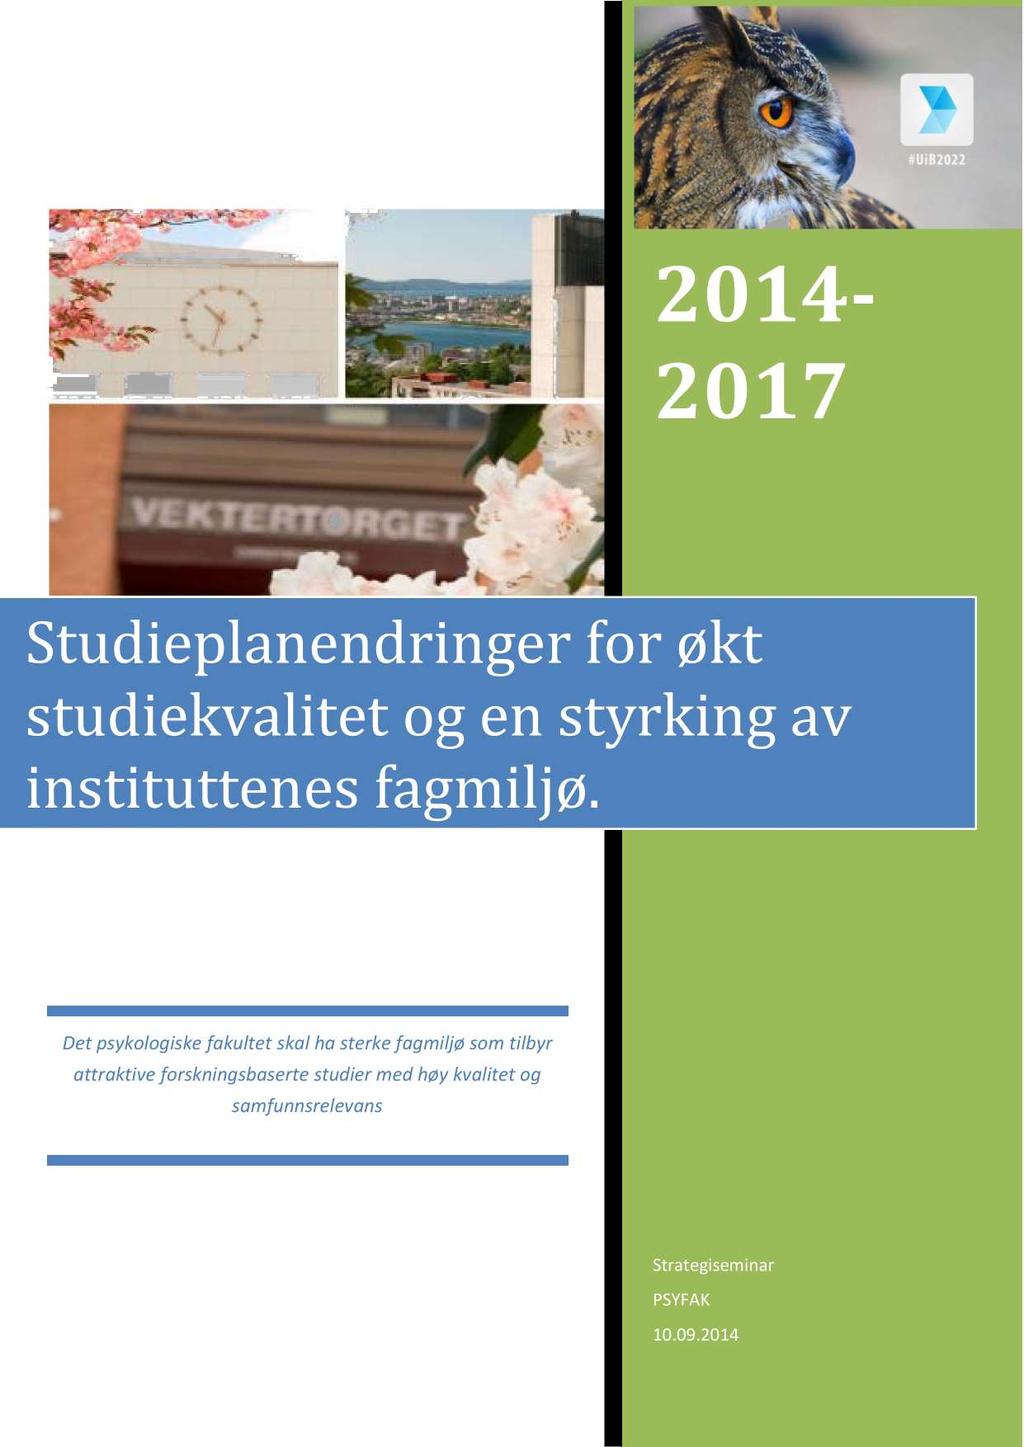 2014-2017 Studieplanendringer for økt studiekvalitet og en